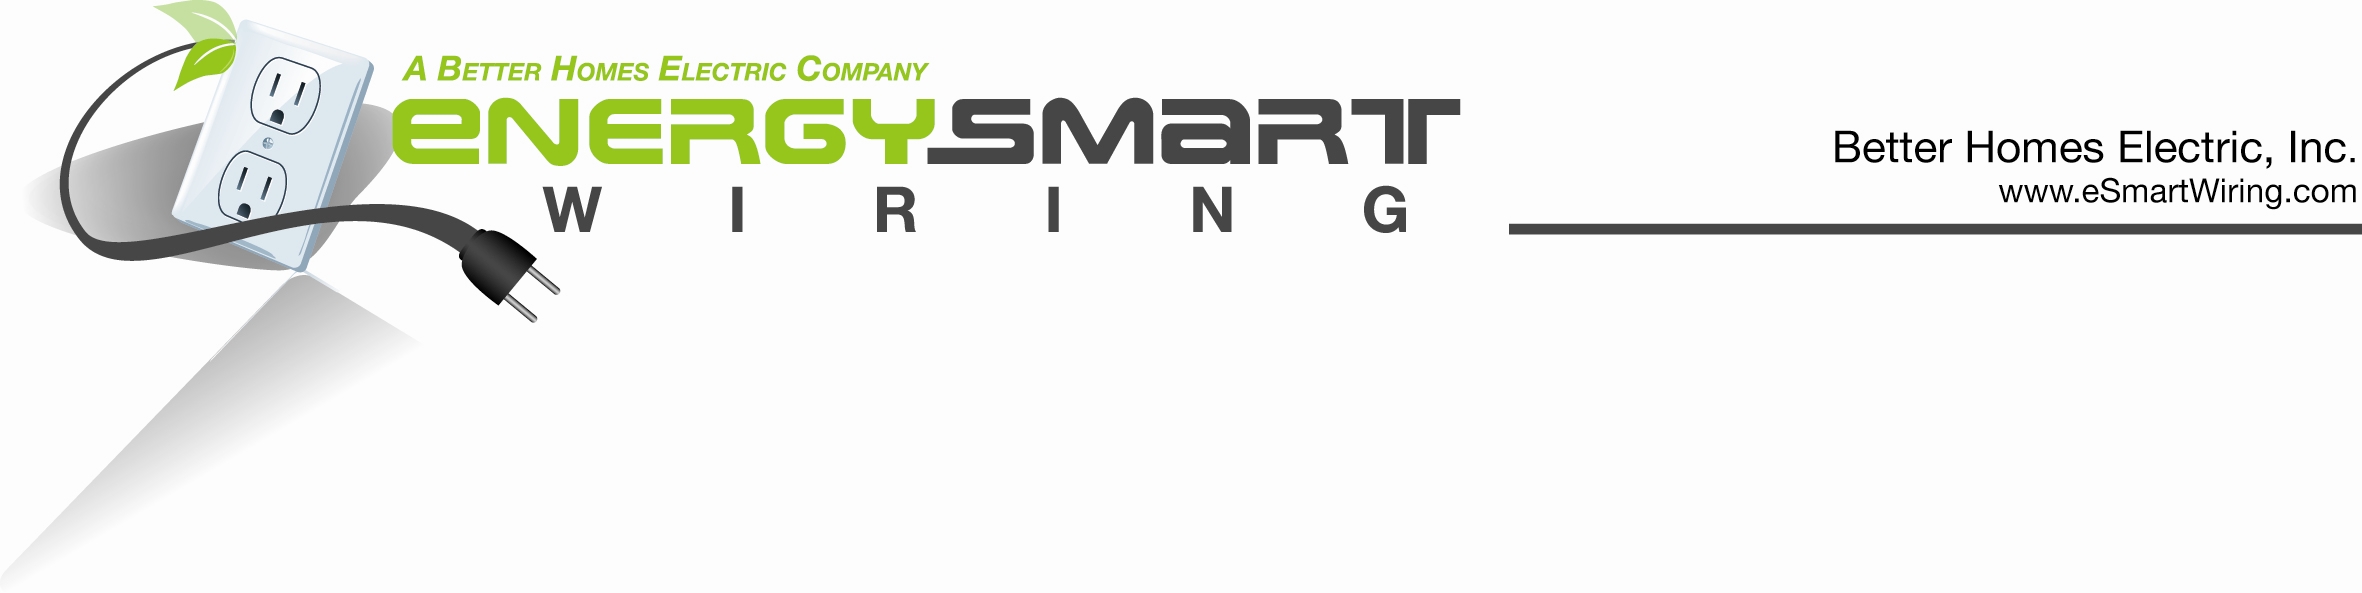 Better Homes Electric, Inc. DBA Energy Smart Wiring Logo